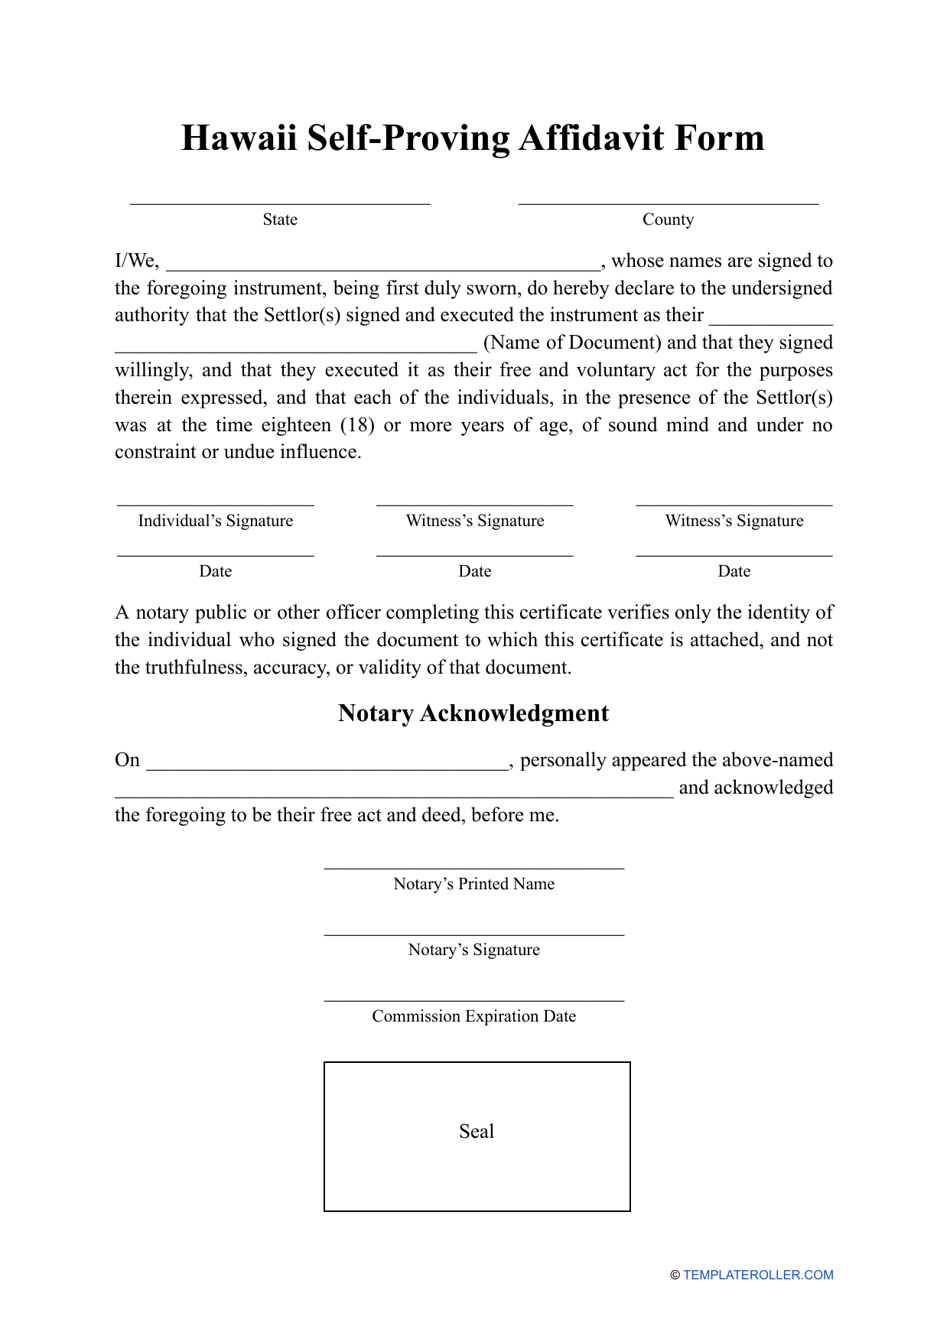 Self-proving Affidavit Form - Hawaii, Page 1